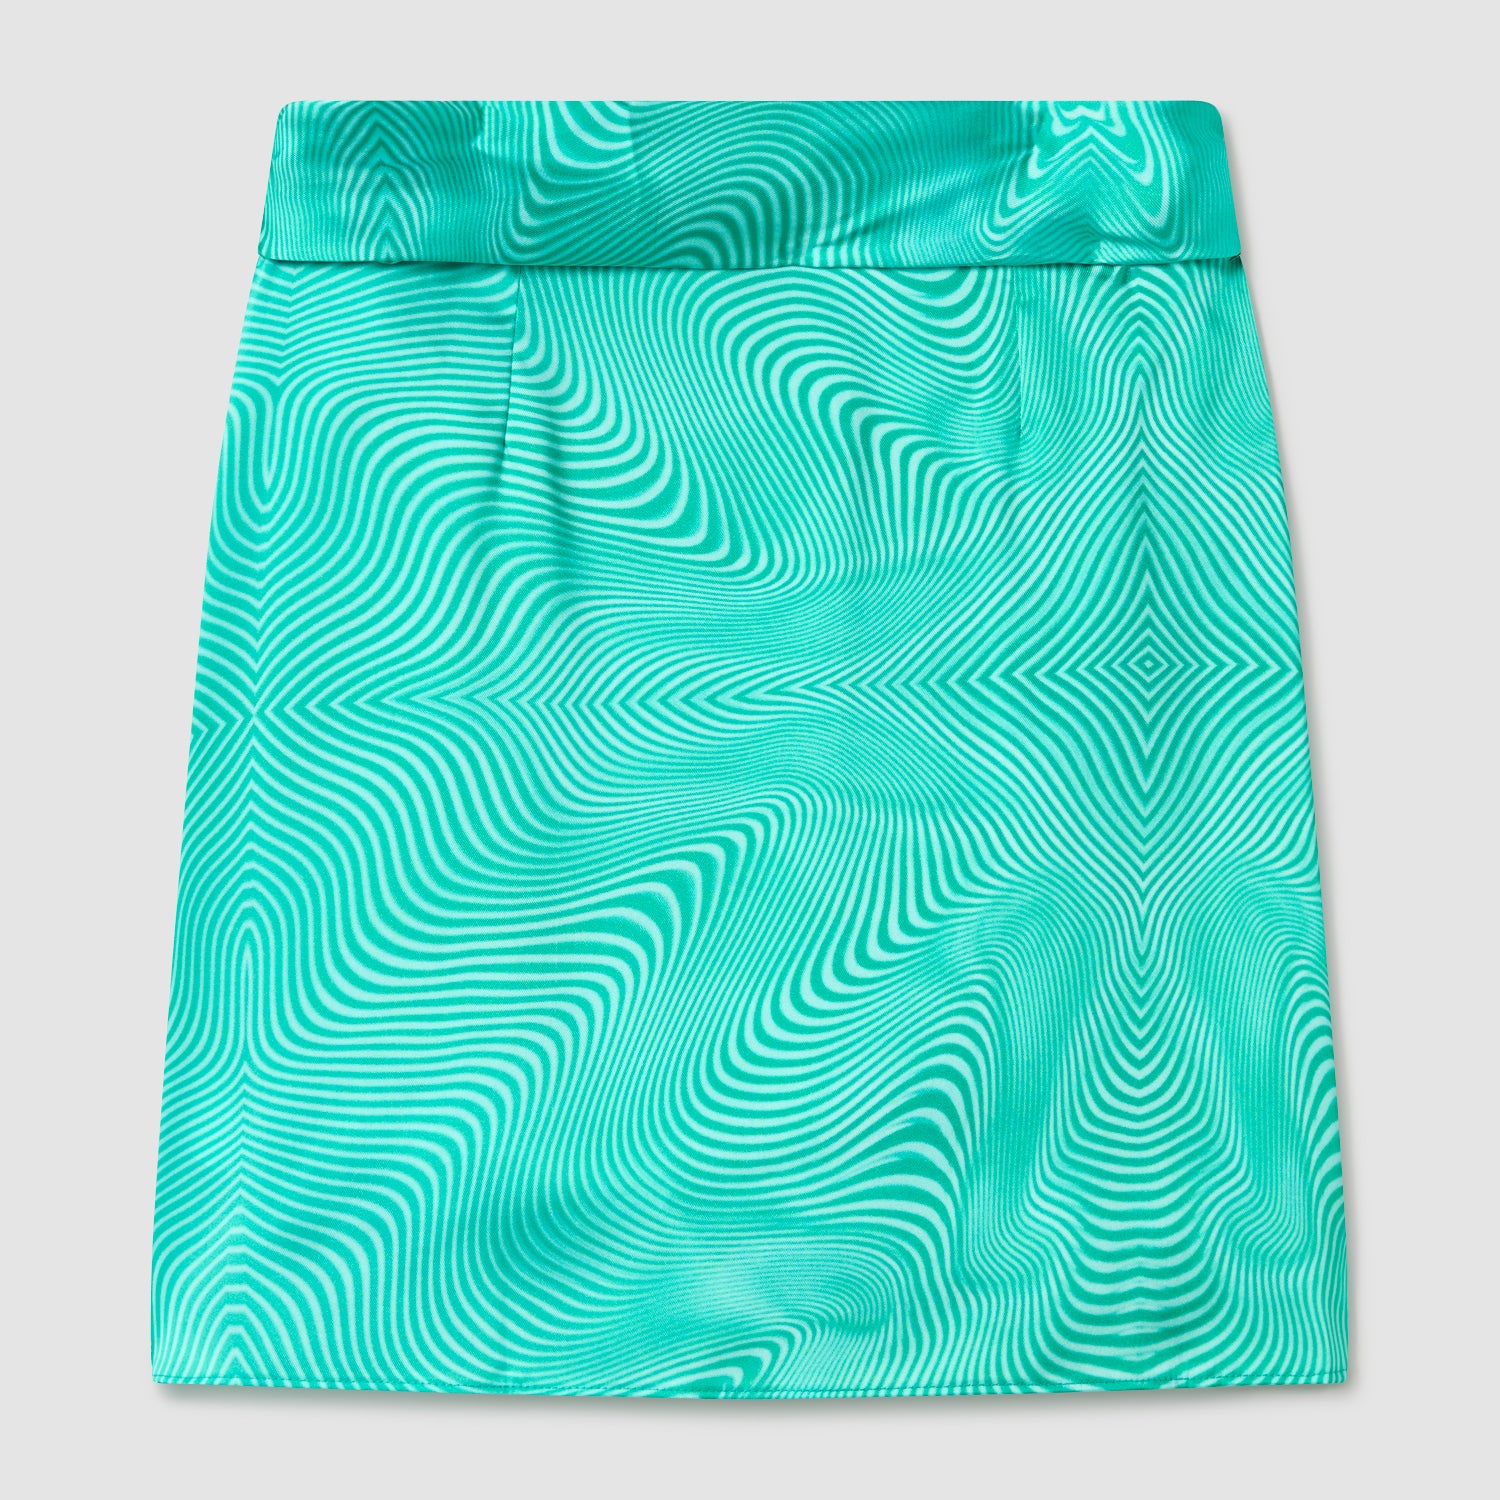 Pareo Skirt Summer 1973